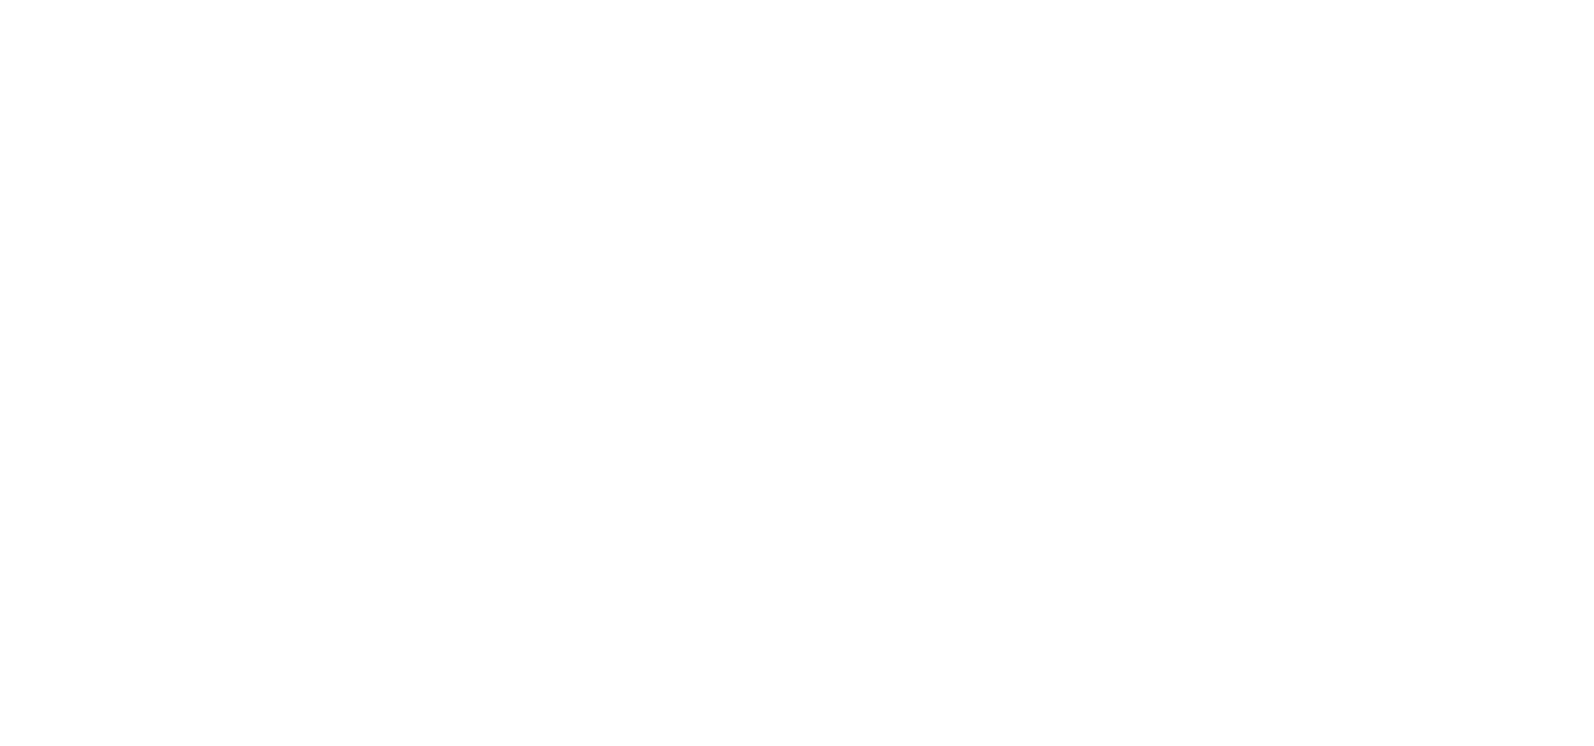 Logo for Verda Crossing Apartments in Keizer, Oregon